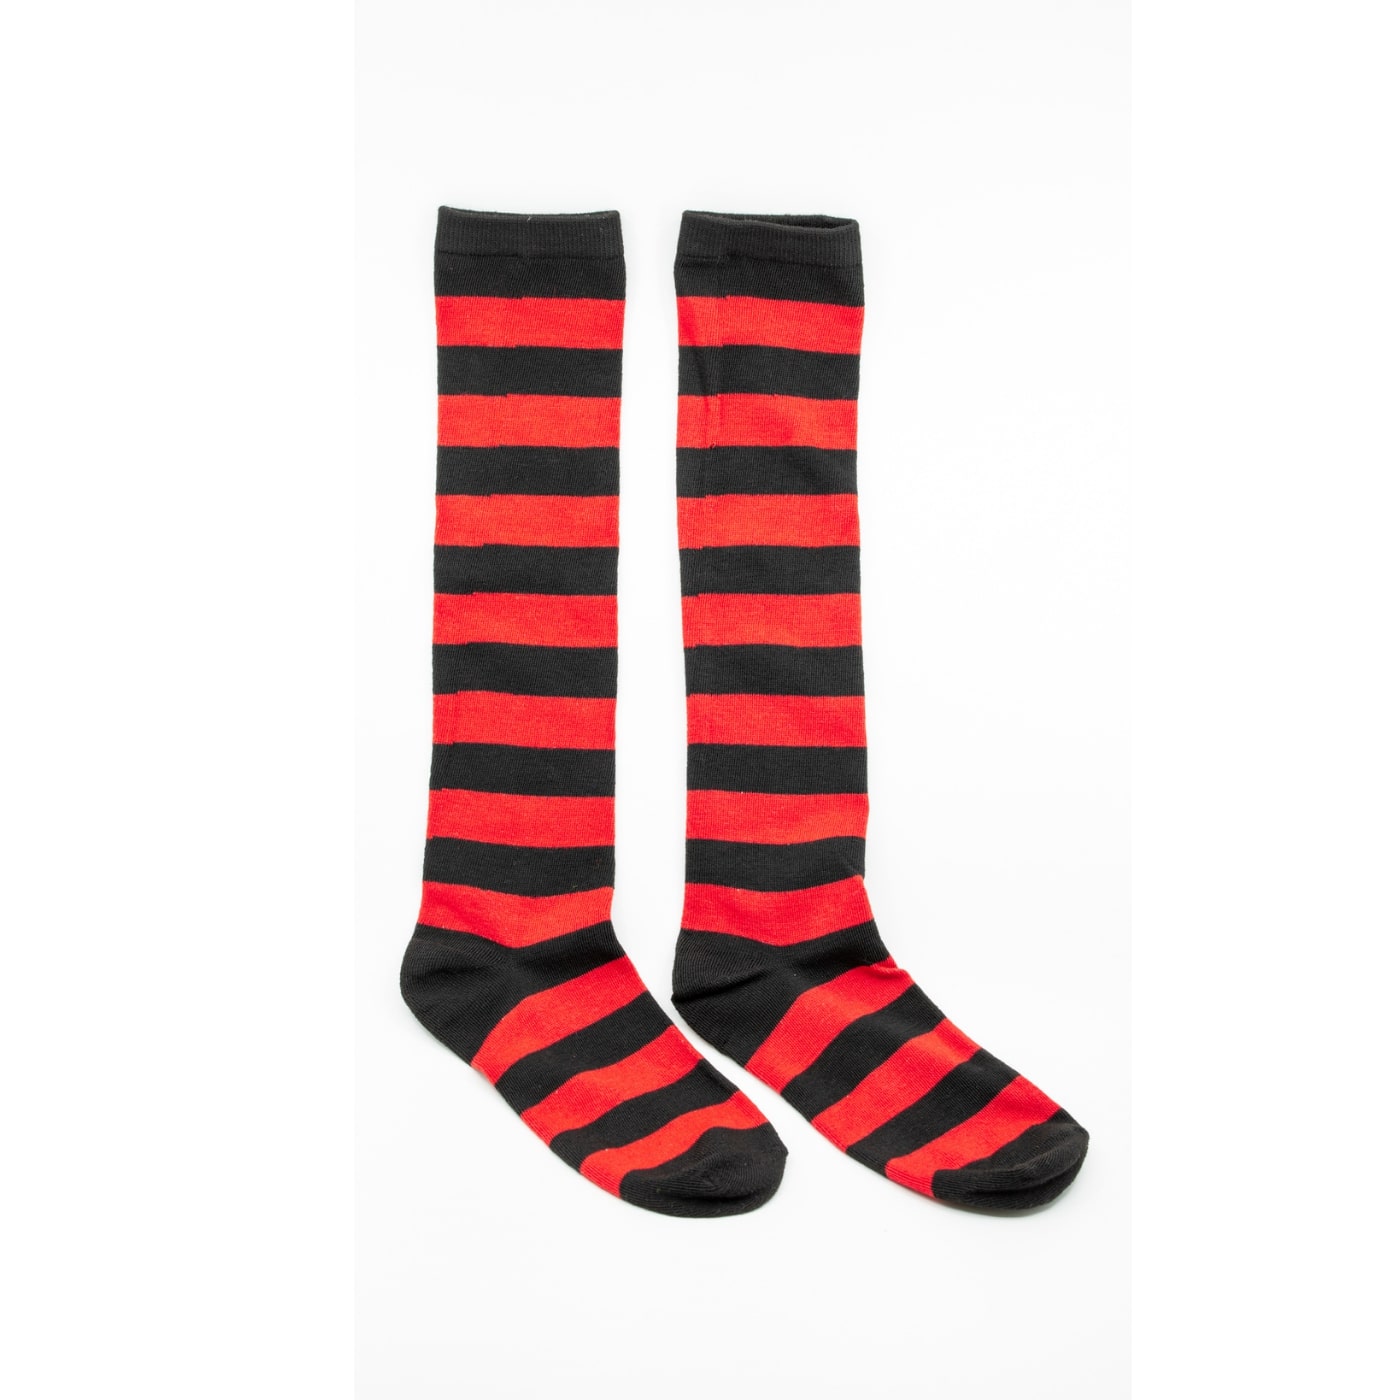 Black & Red Stripe Knee High Socks by RainbowsAndFairies.com.au (Stripe Long Socks - Rainbow - Stockings - Colourful Socks - Vintage Inspired) - SKU: FW_SOCKS_STRIPE_B&R - Pic-02